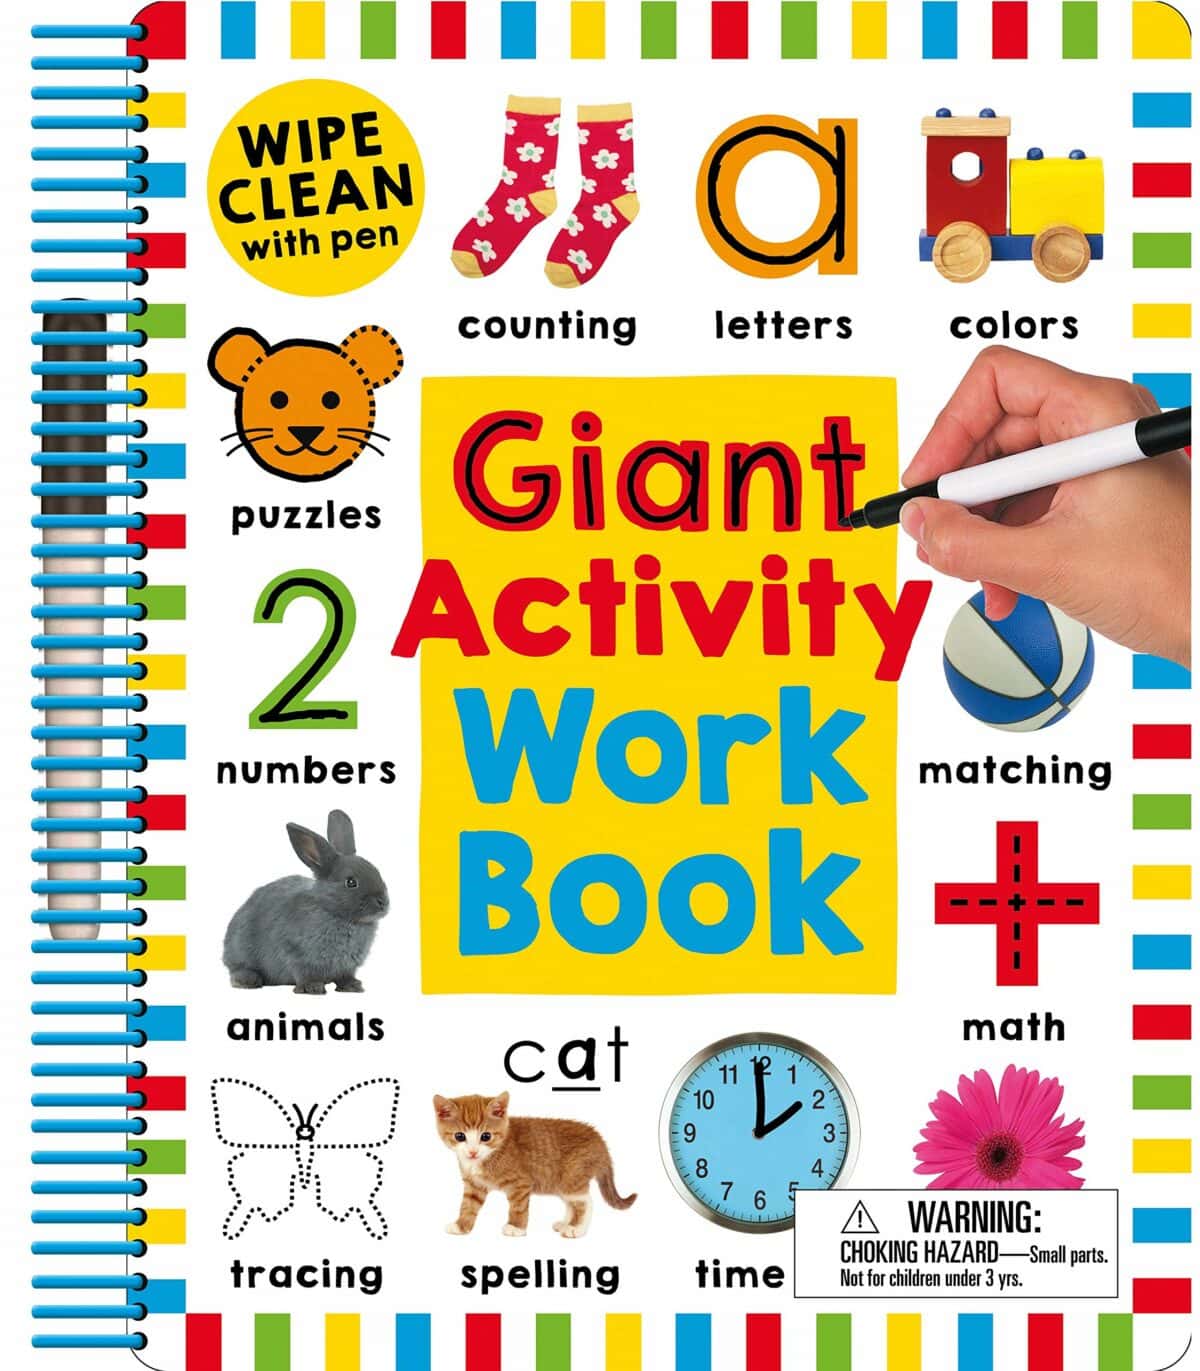 Giant Activity Work Book